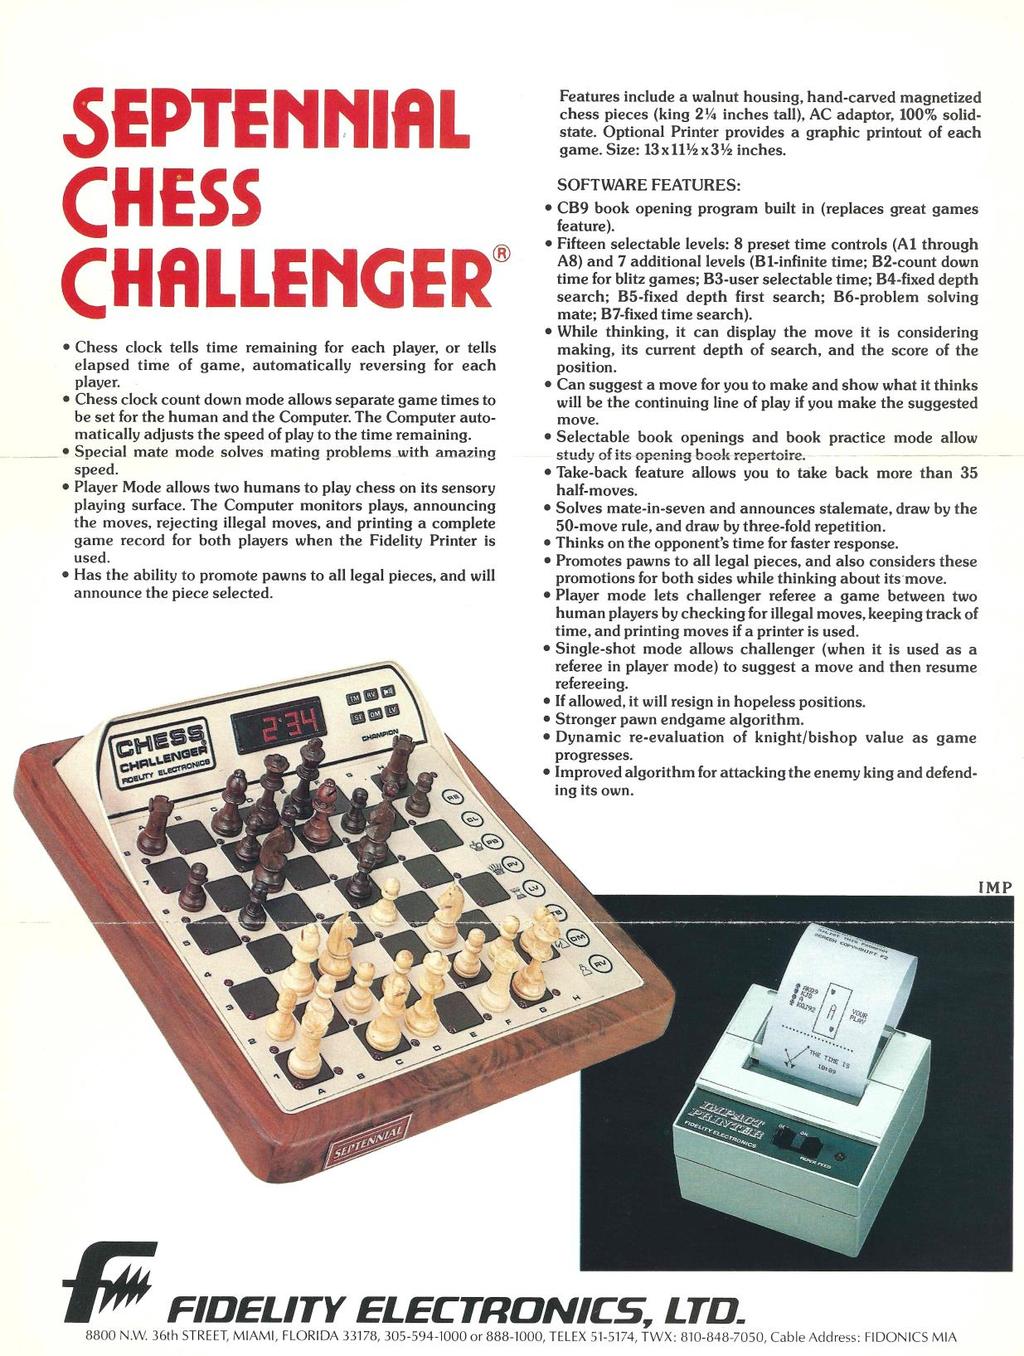 Fidelity Septennial Chess Challenger (Source: Fidelity Electronics International Miami Florida USA) (photo copyright by